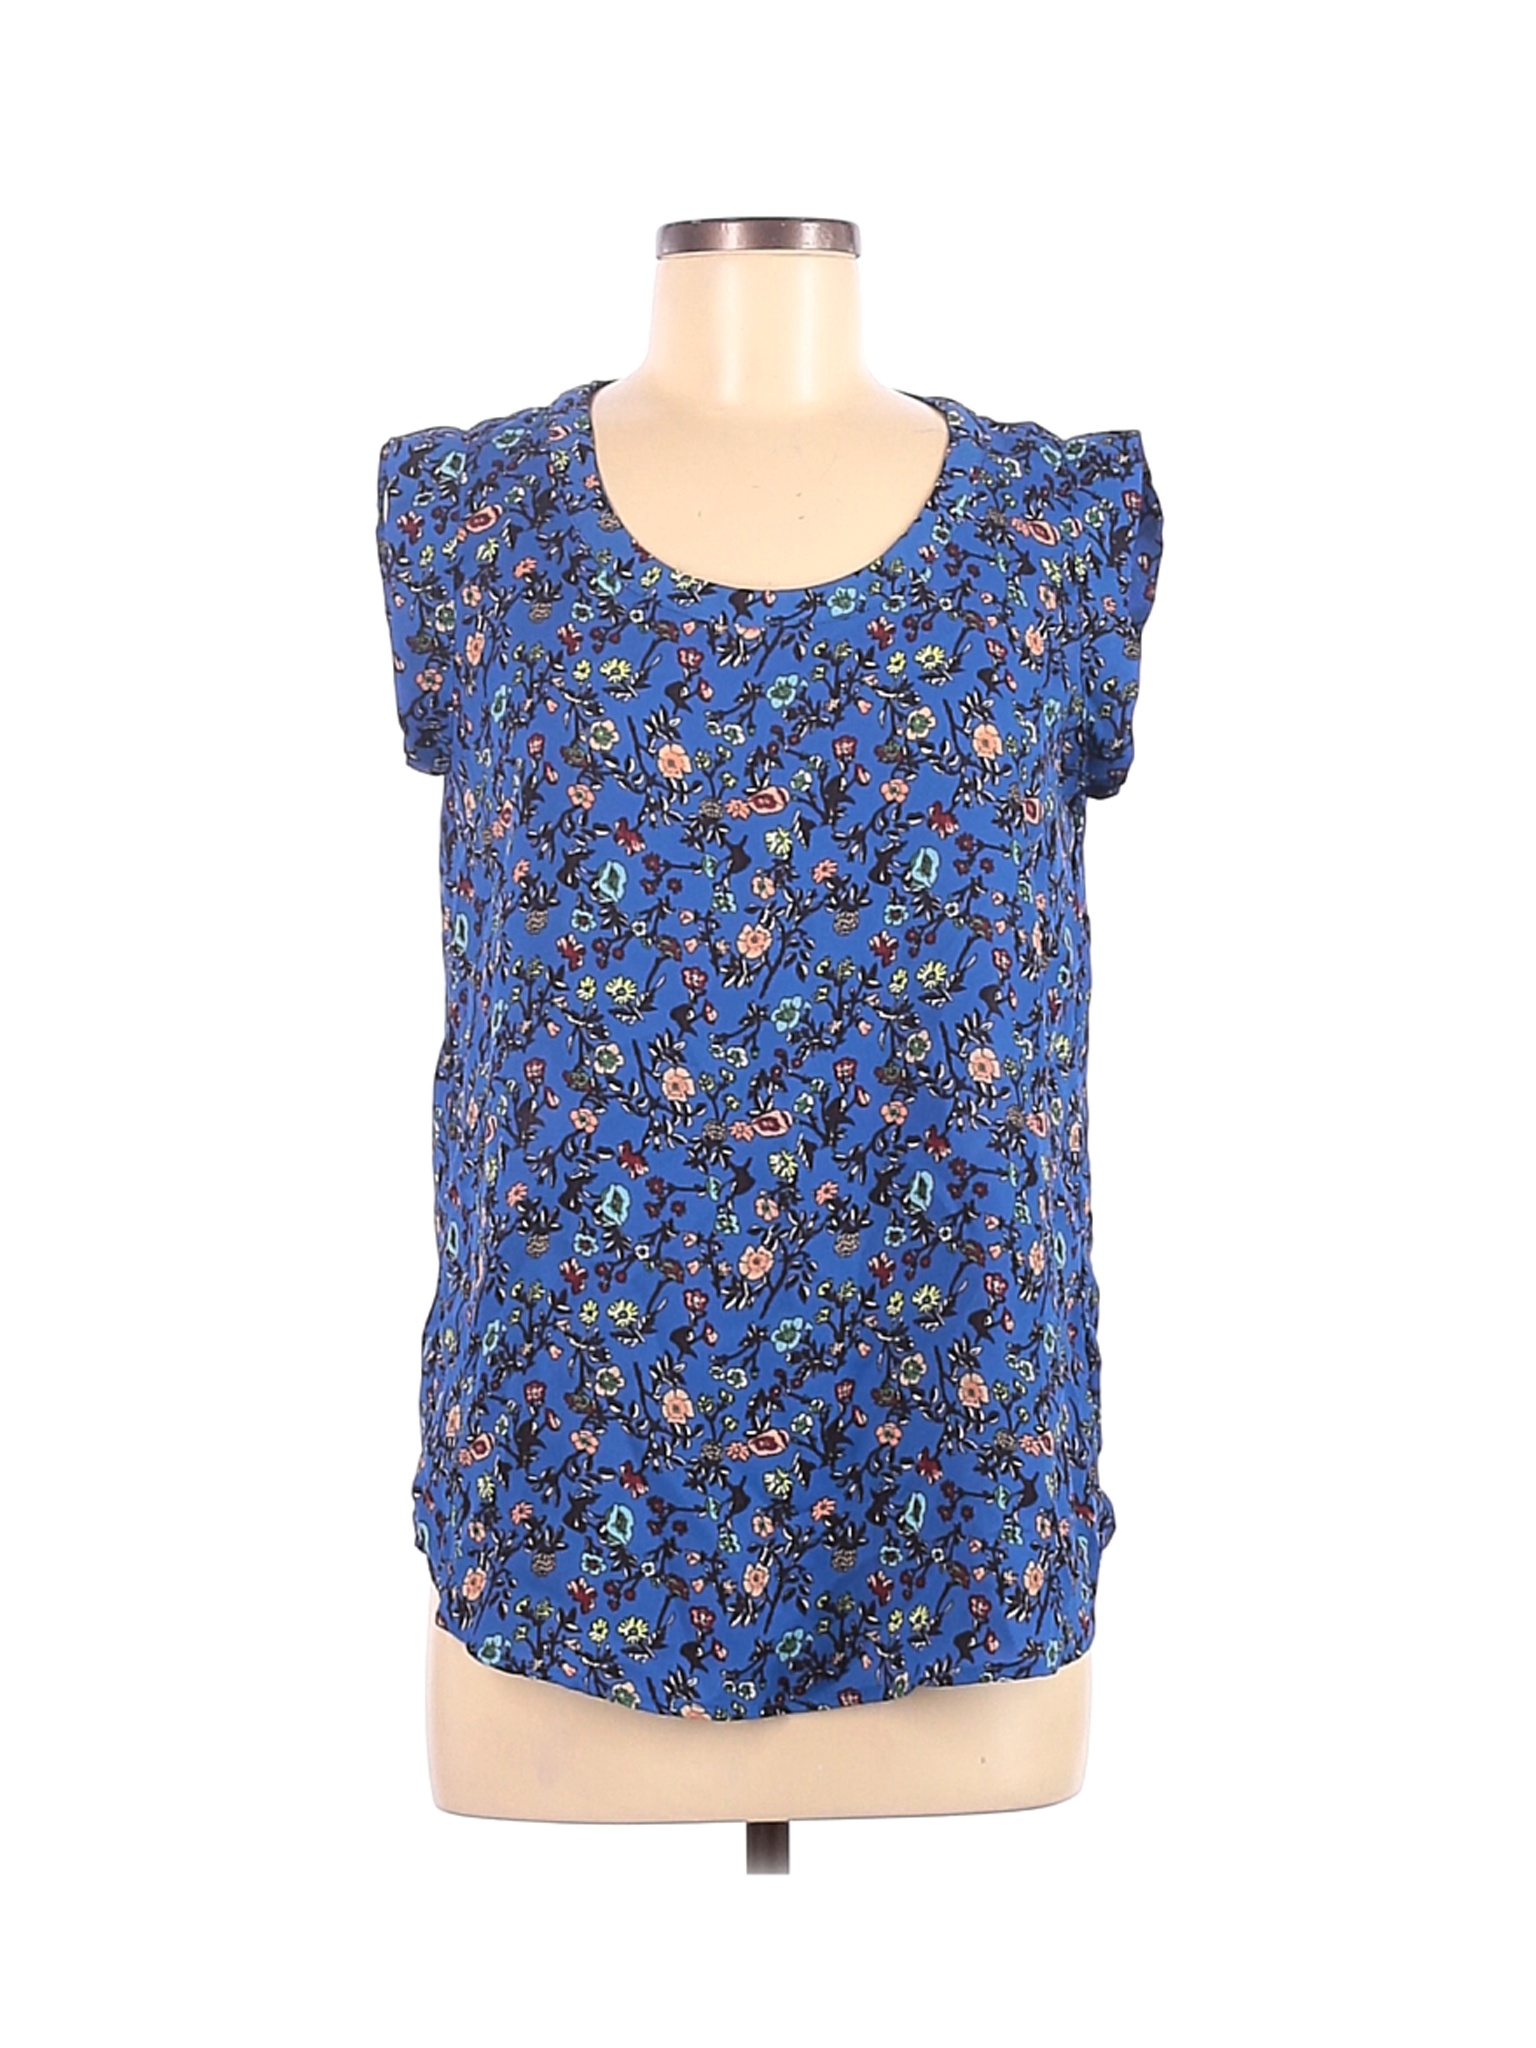 Pleione Women Blue Short Sleeve Blouse S | eBay